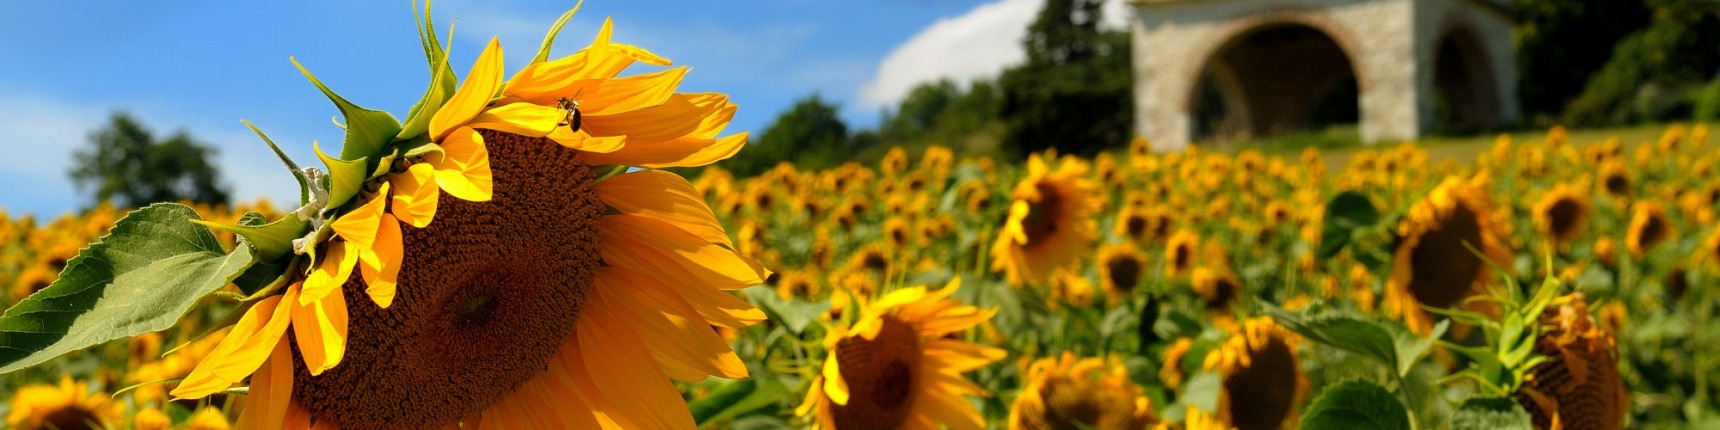 France, sunflowers